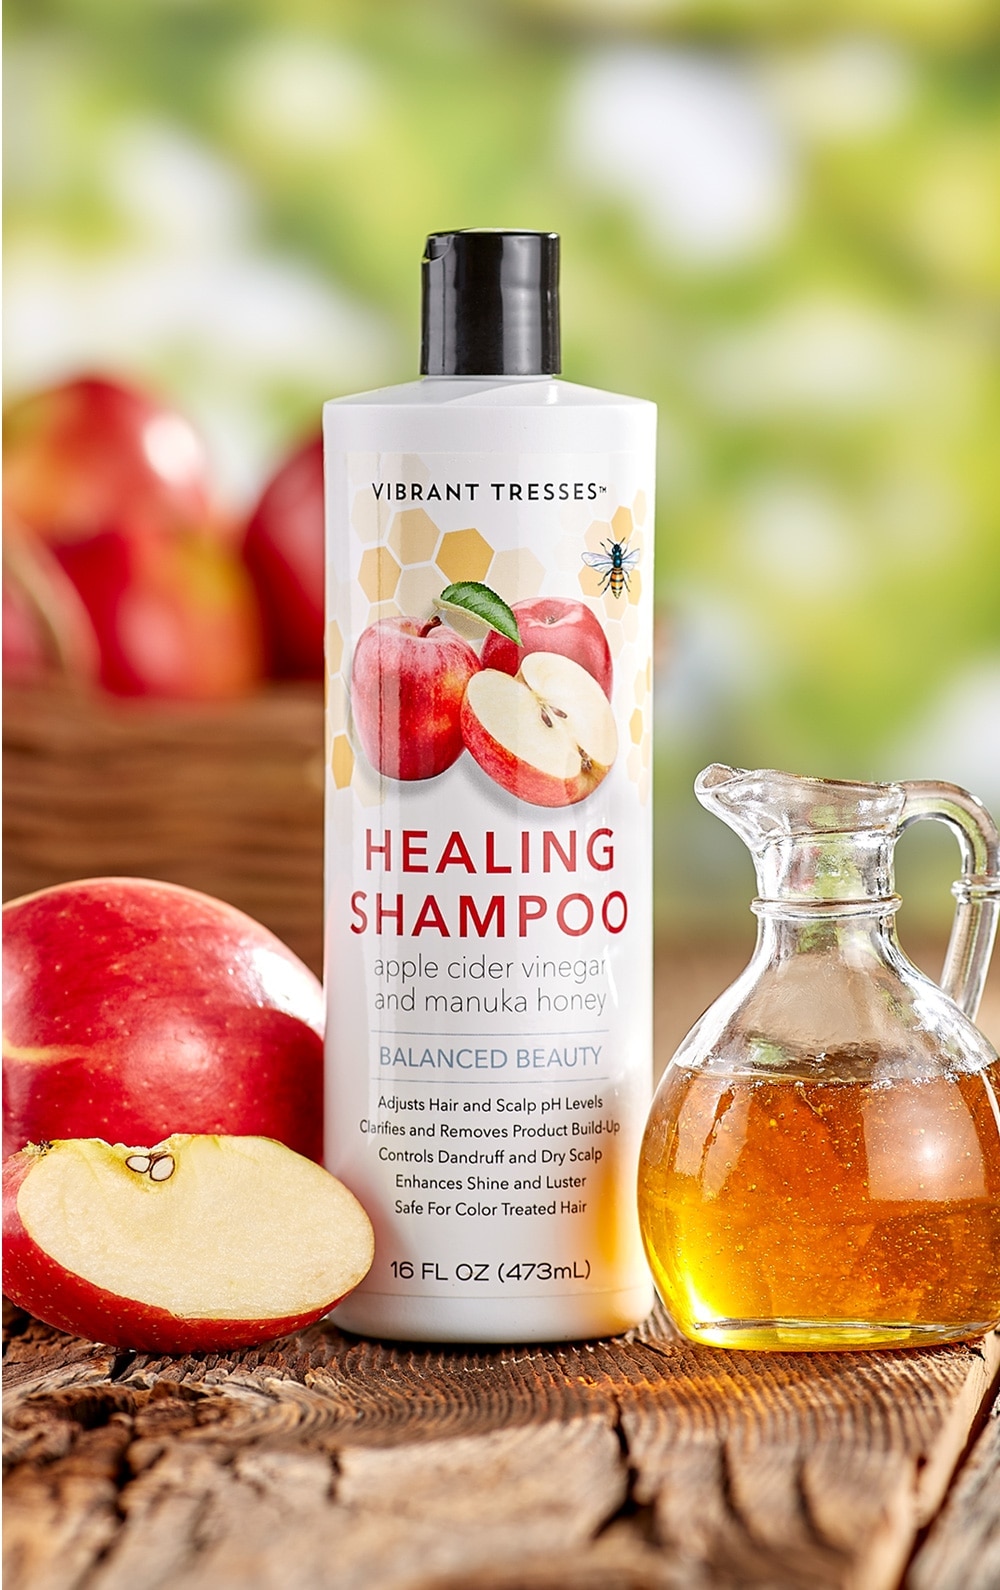 Healing Shampoo made with apple cider vinegar